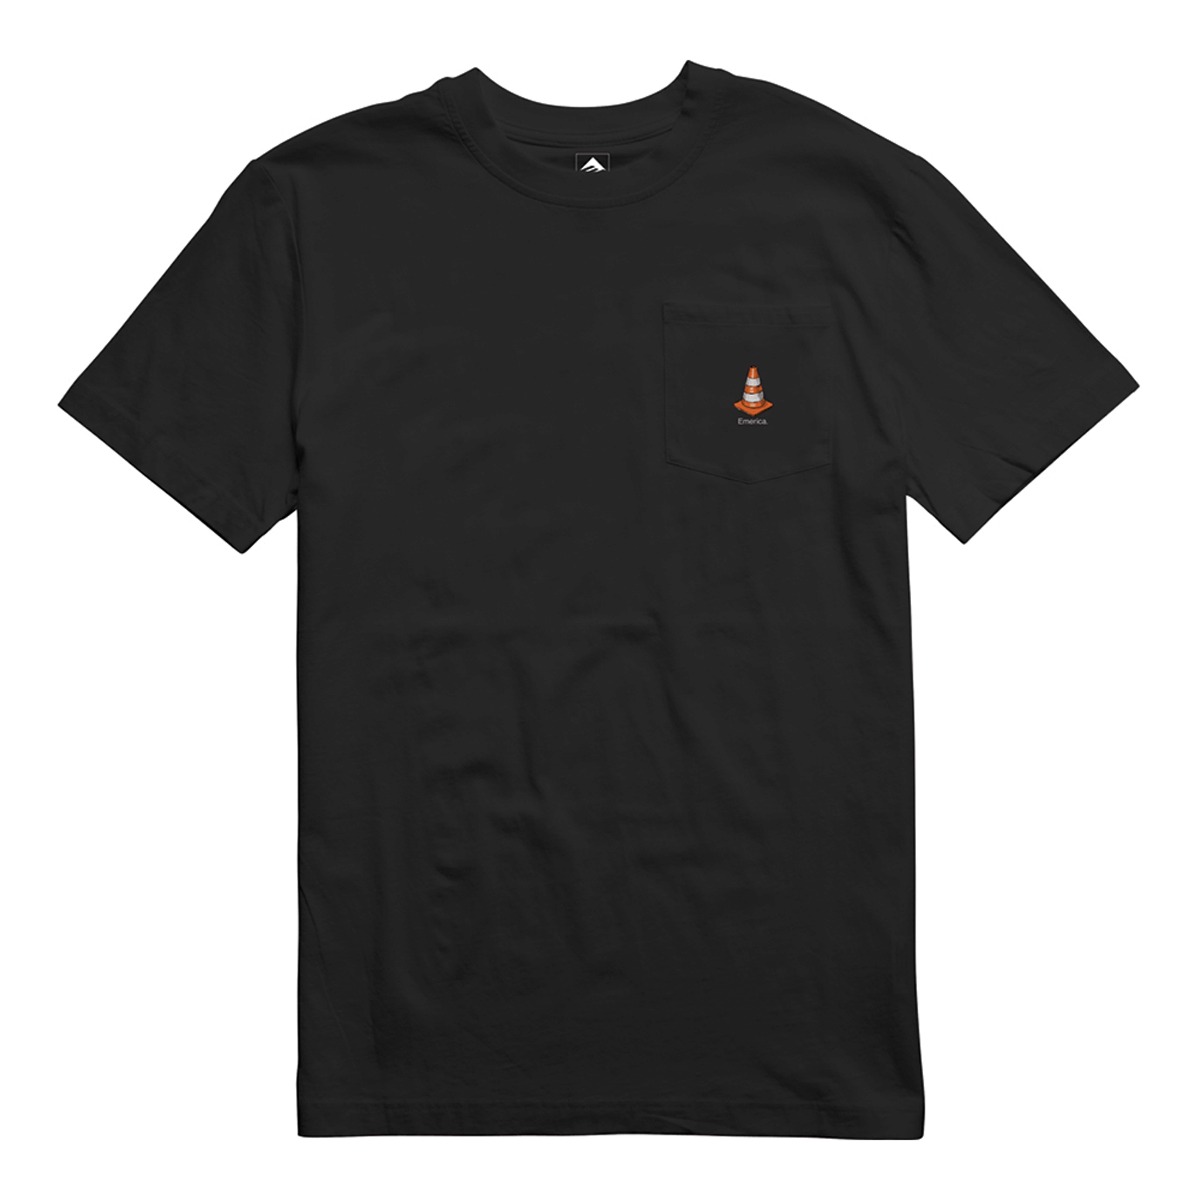 Emerica Streets Pocket Black Ανδρικό T-Shirt